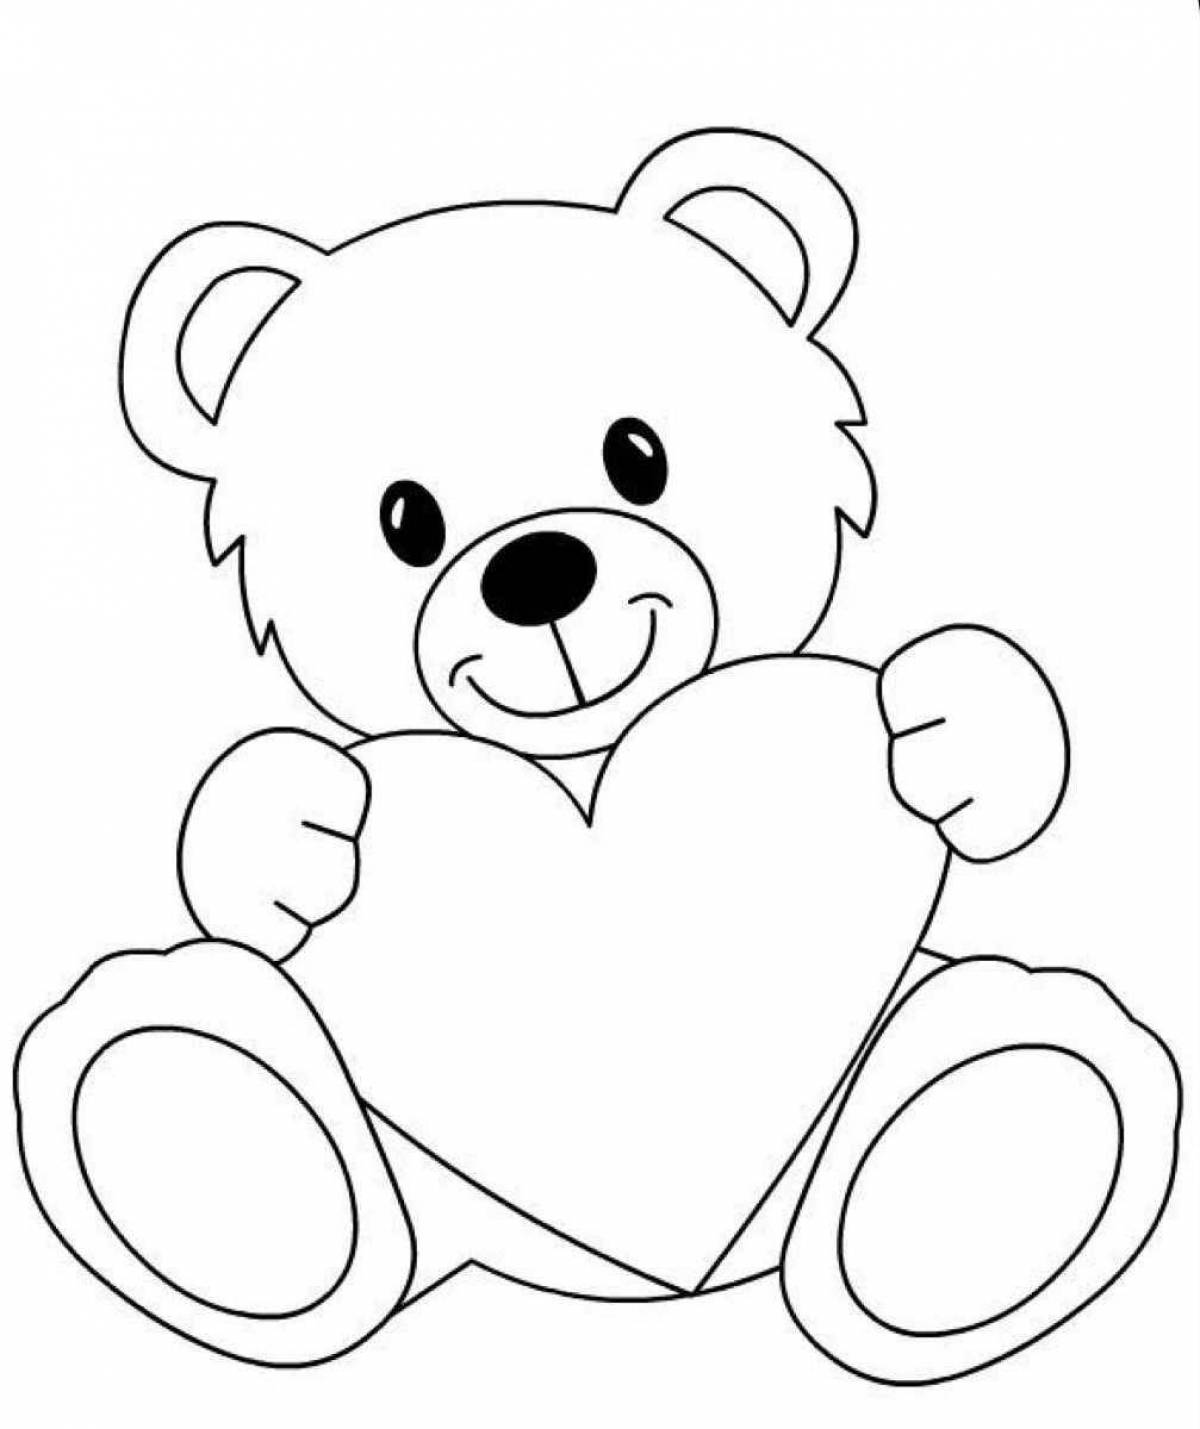 Coloring funny teddy bear